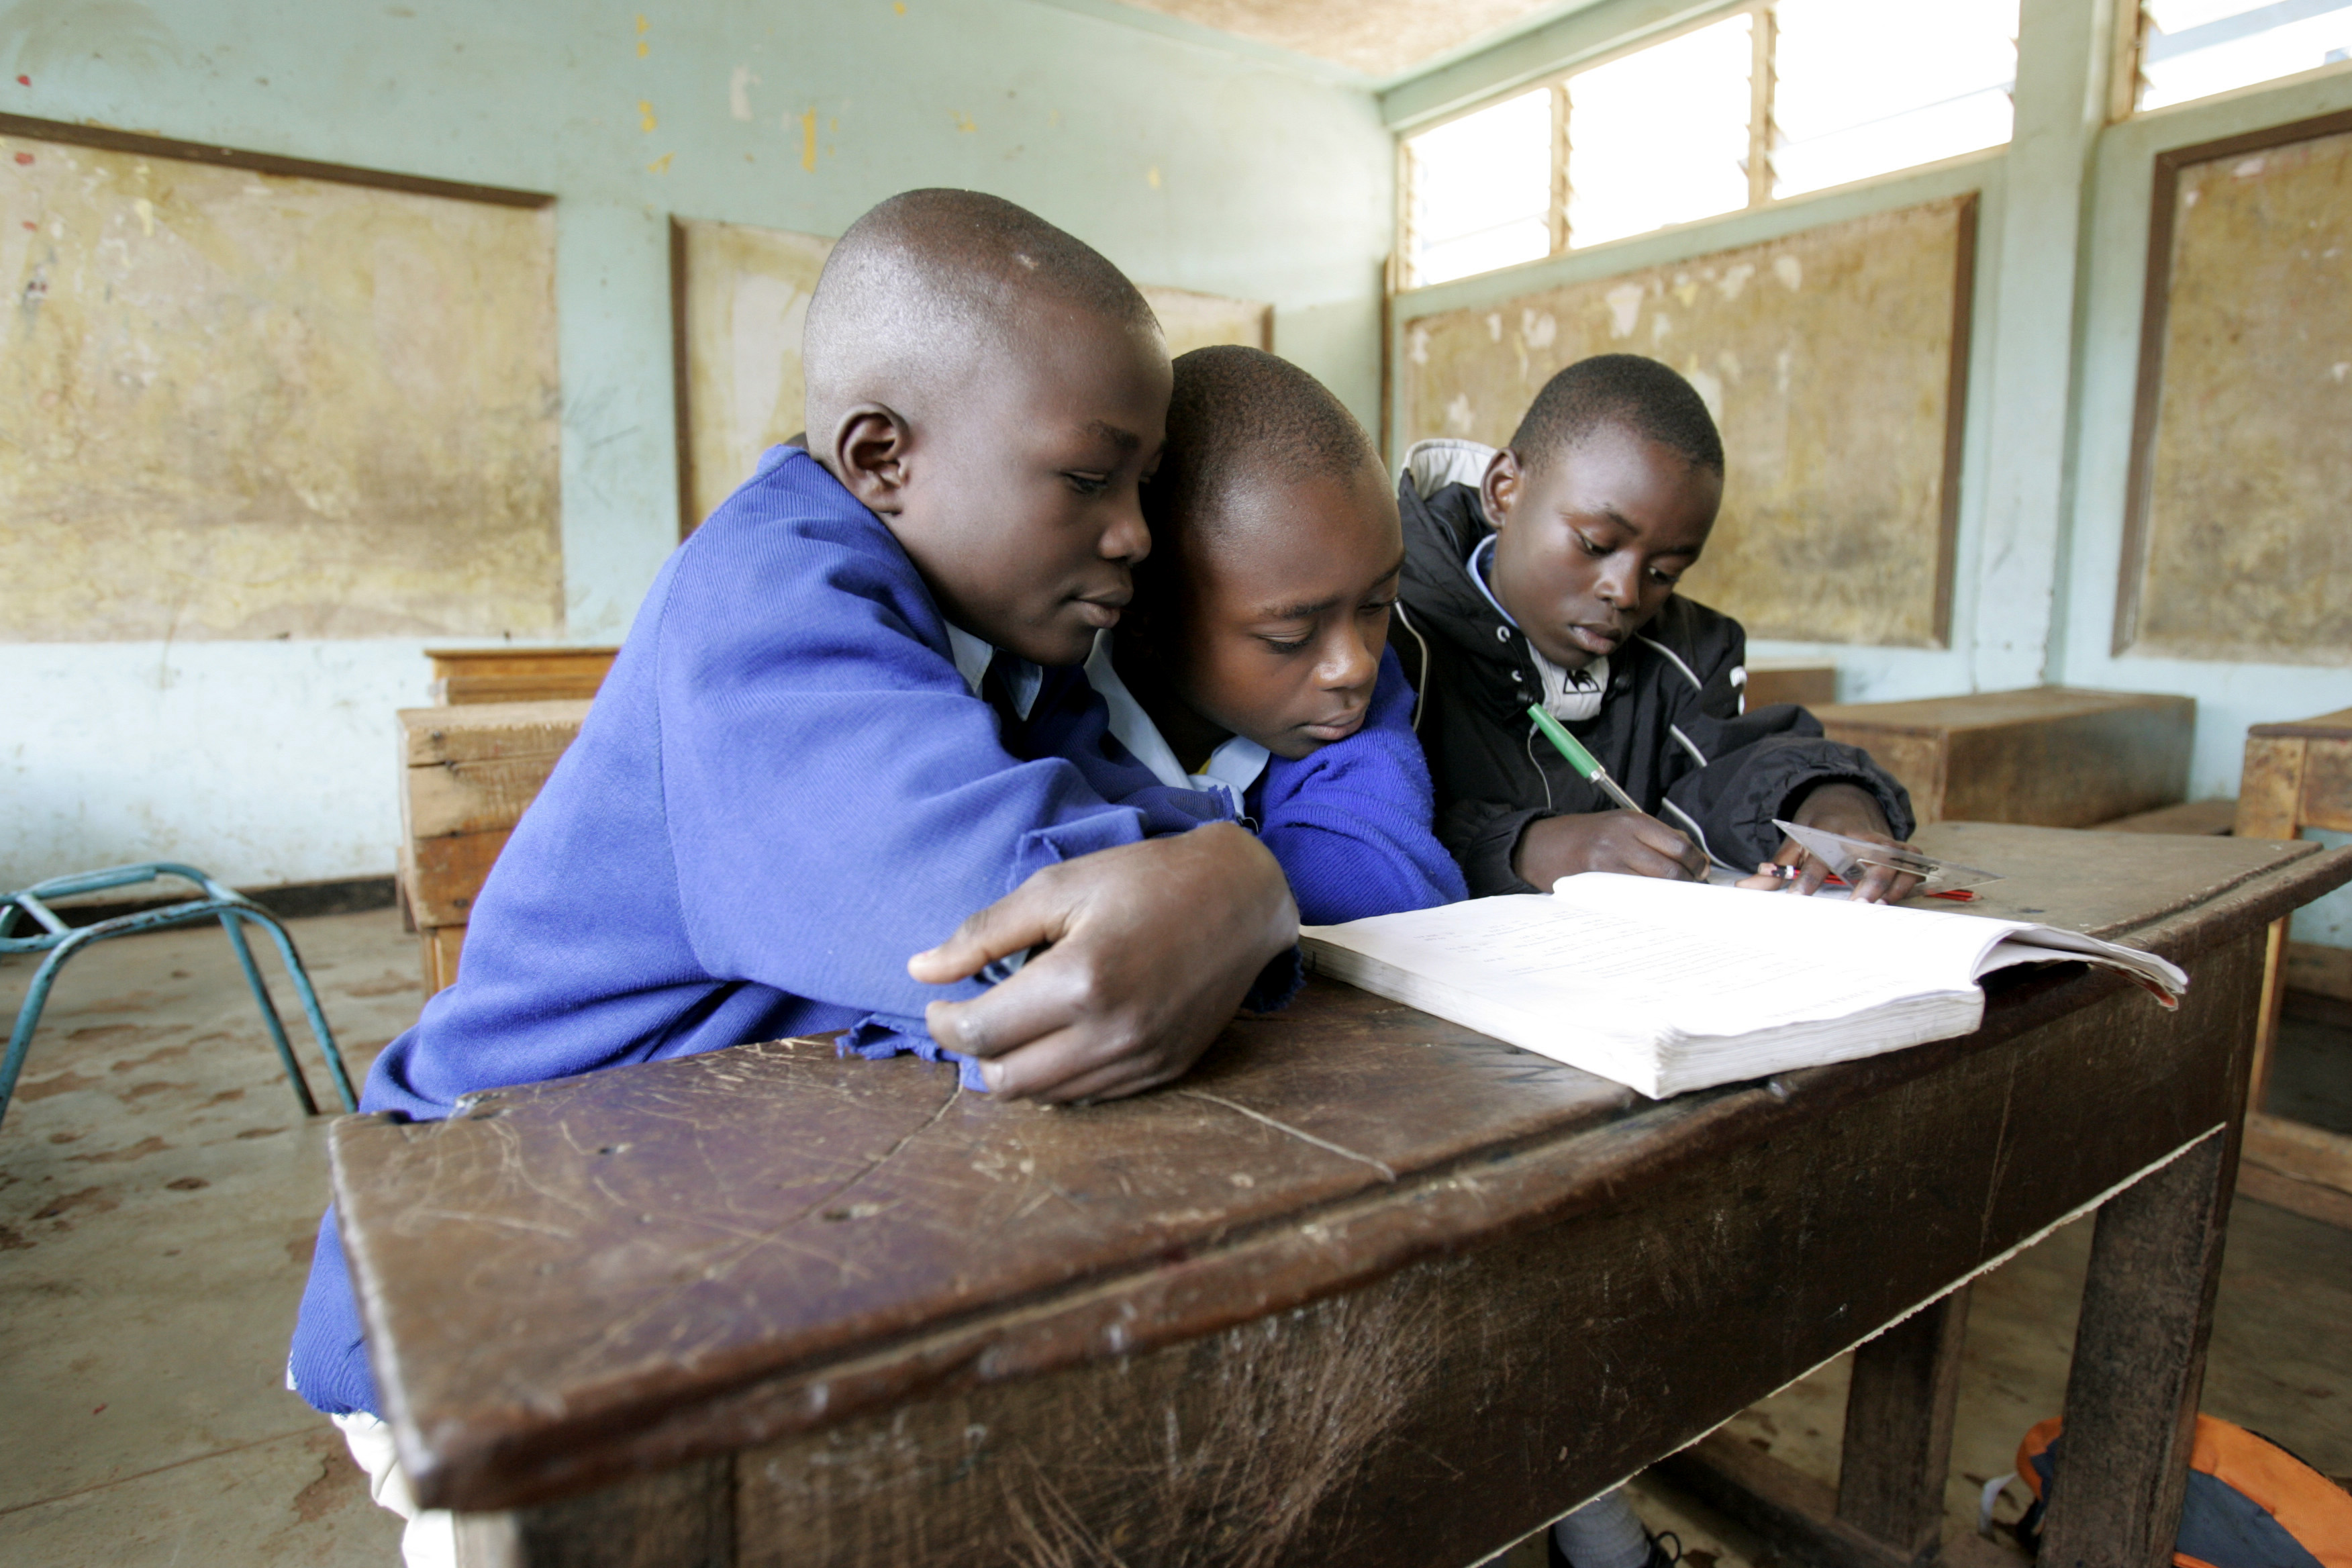 post secondary education in kenya